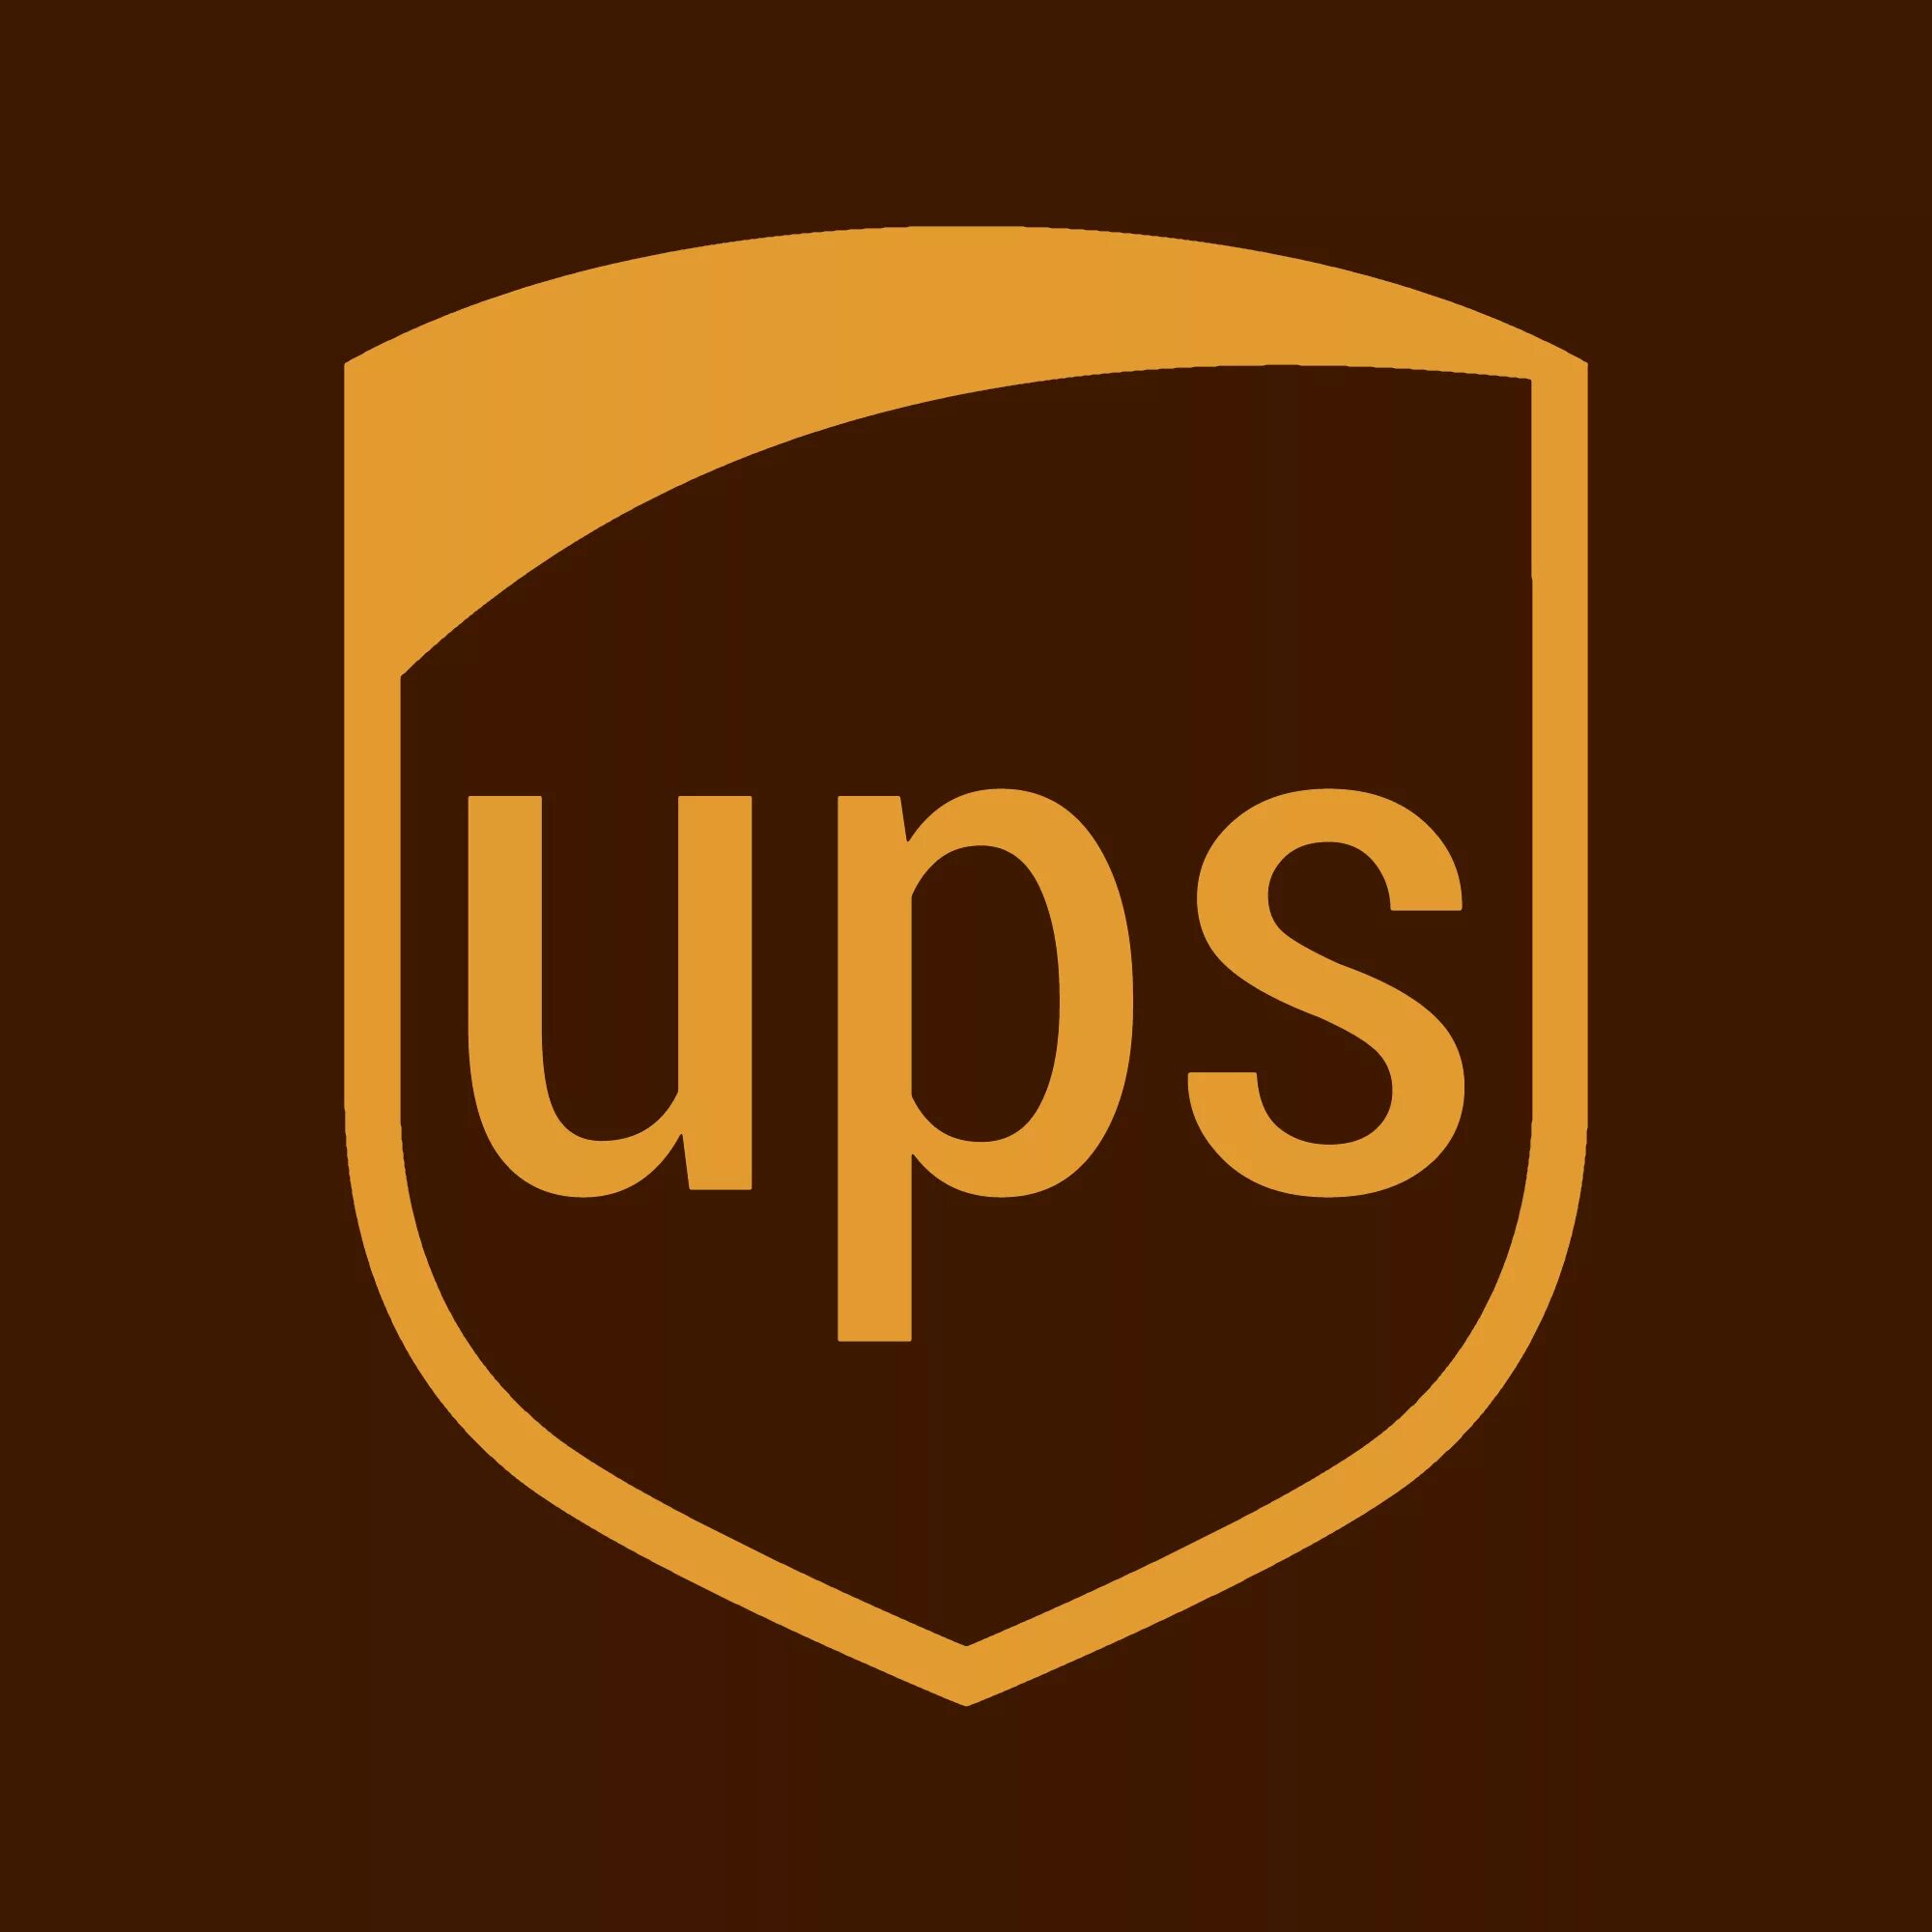 Ups bank. Ups. Компания ups. Логотип ЮПС. Курьерская служба ups.